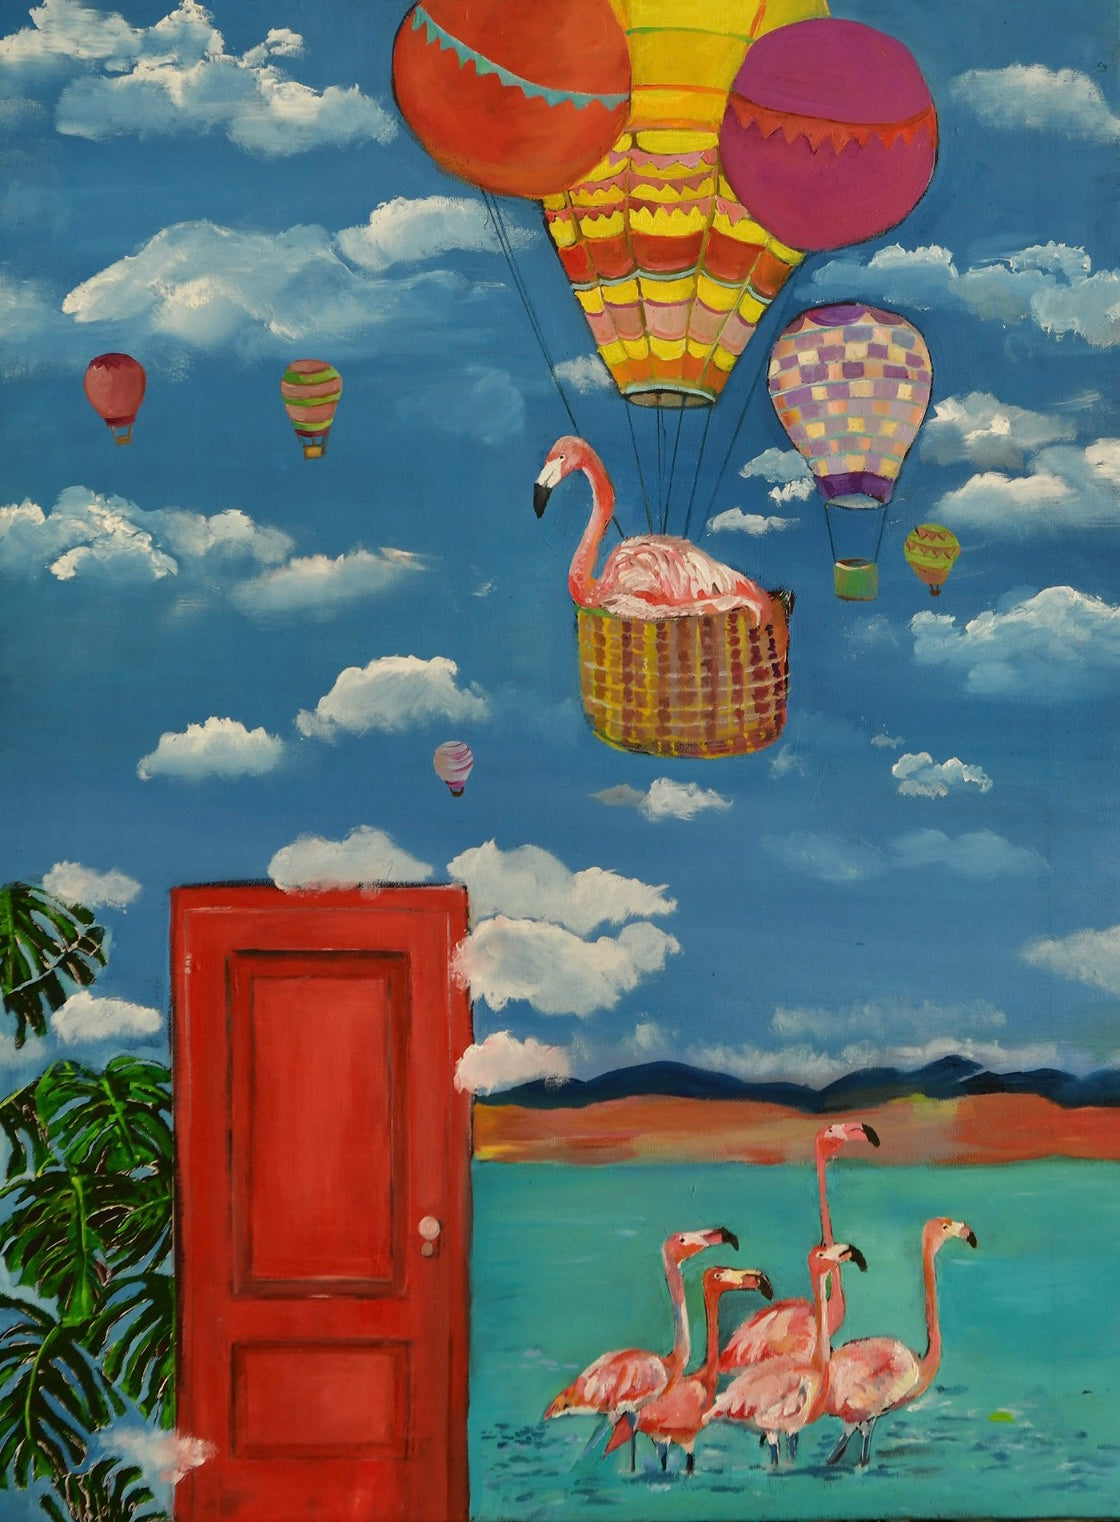 When one door shuts by Anjali Rajkumar | Oil on canvas wall art